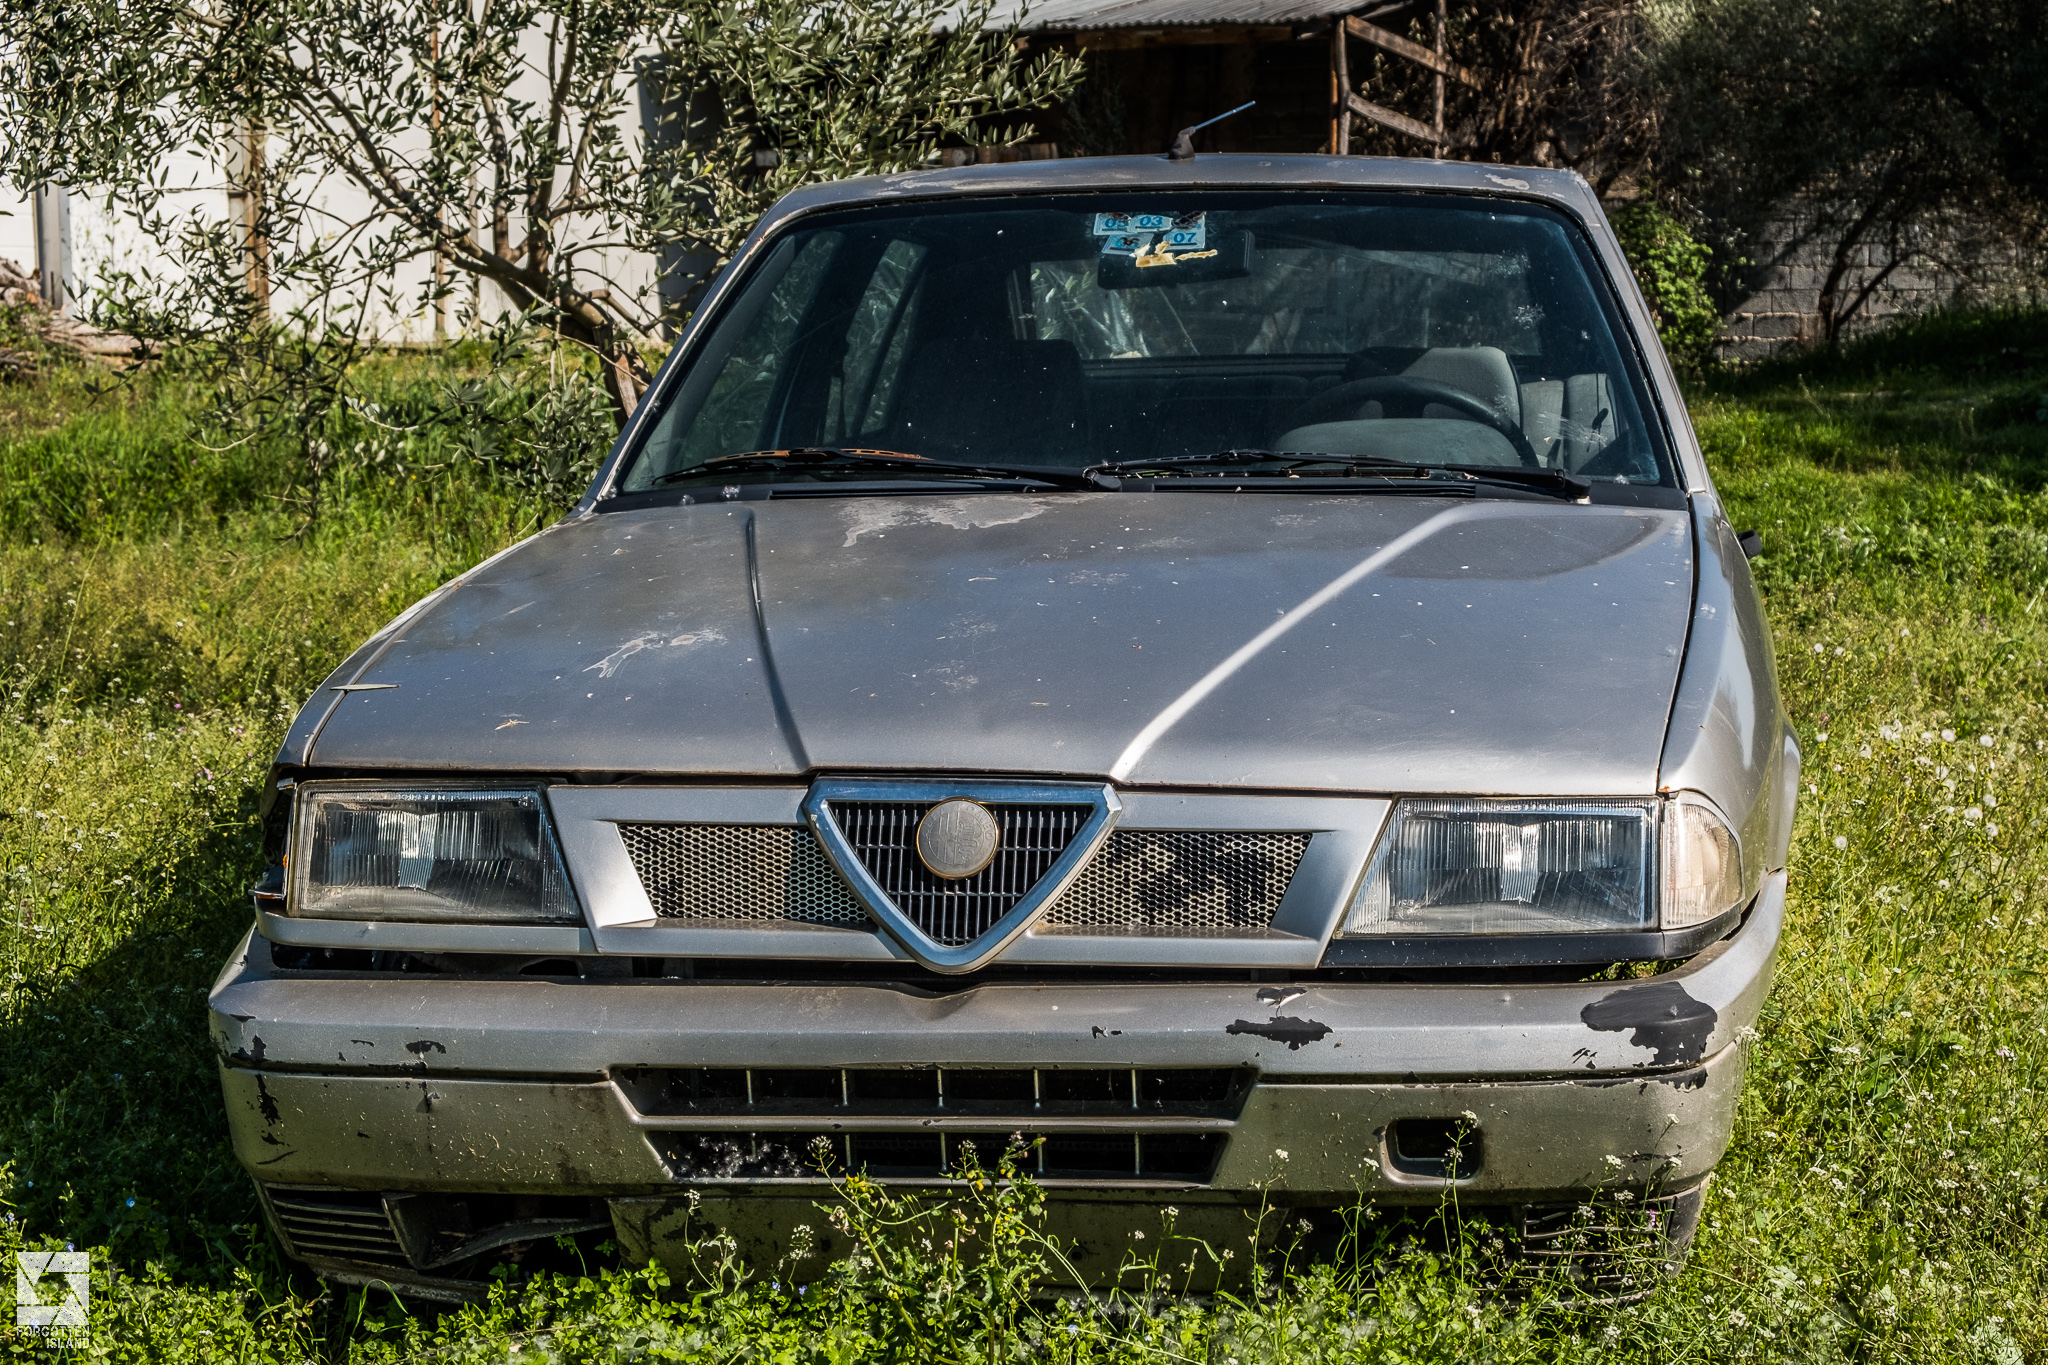 Abandoned Greek Cars